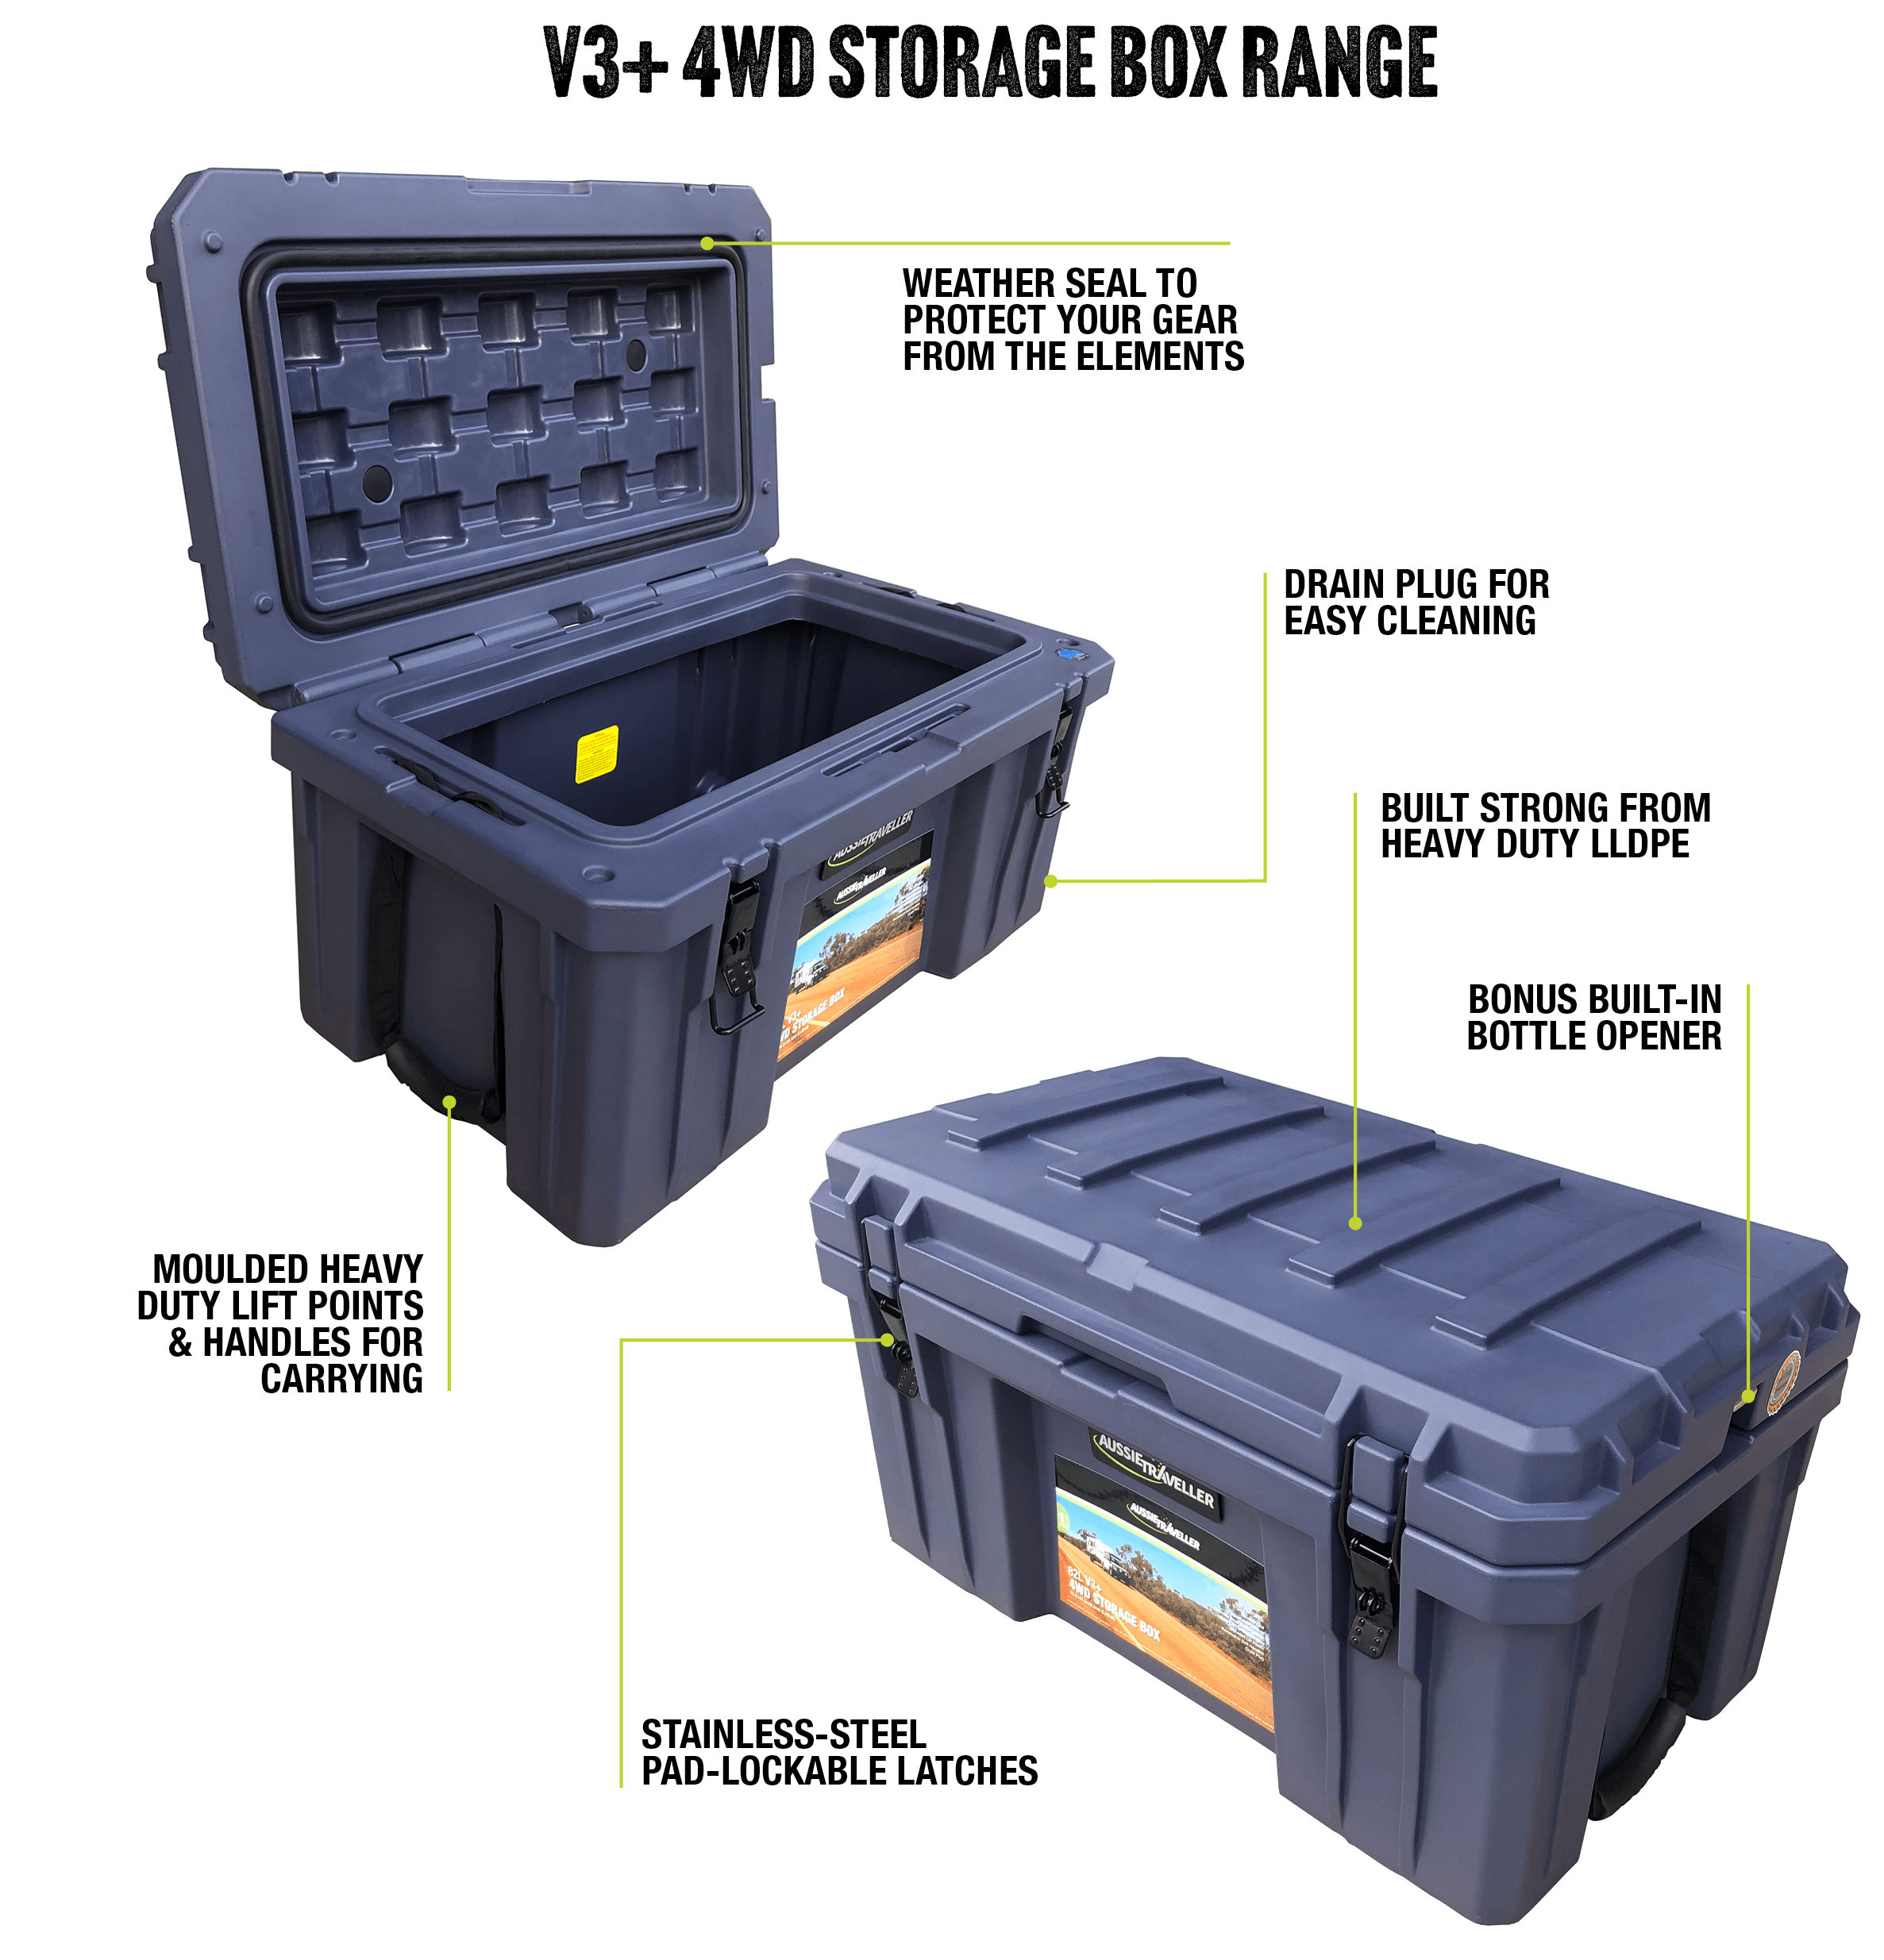 4WD Storage Box V3+ 82L @ A$109.99